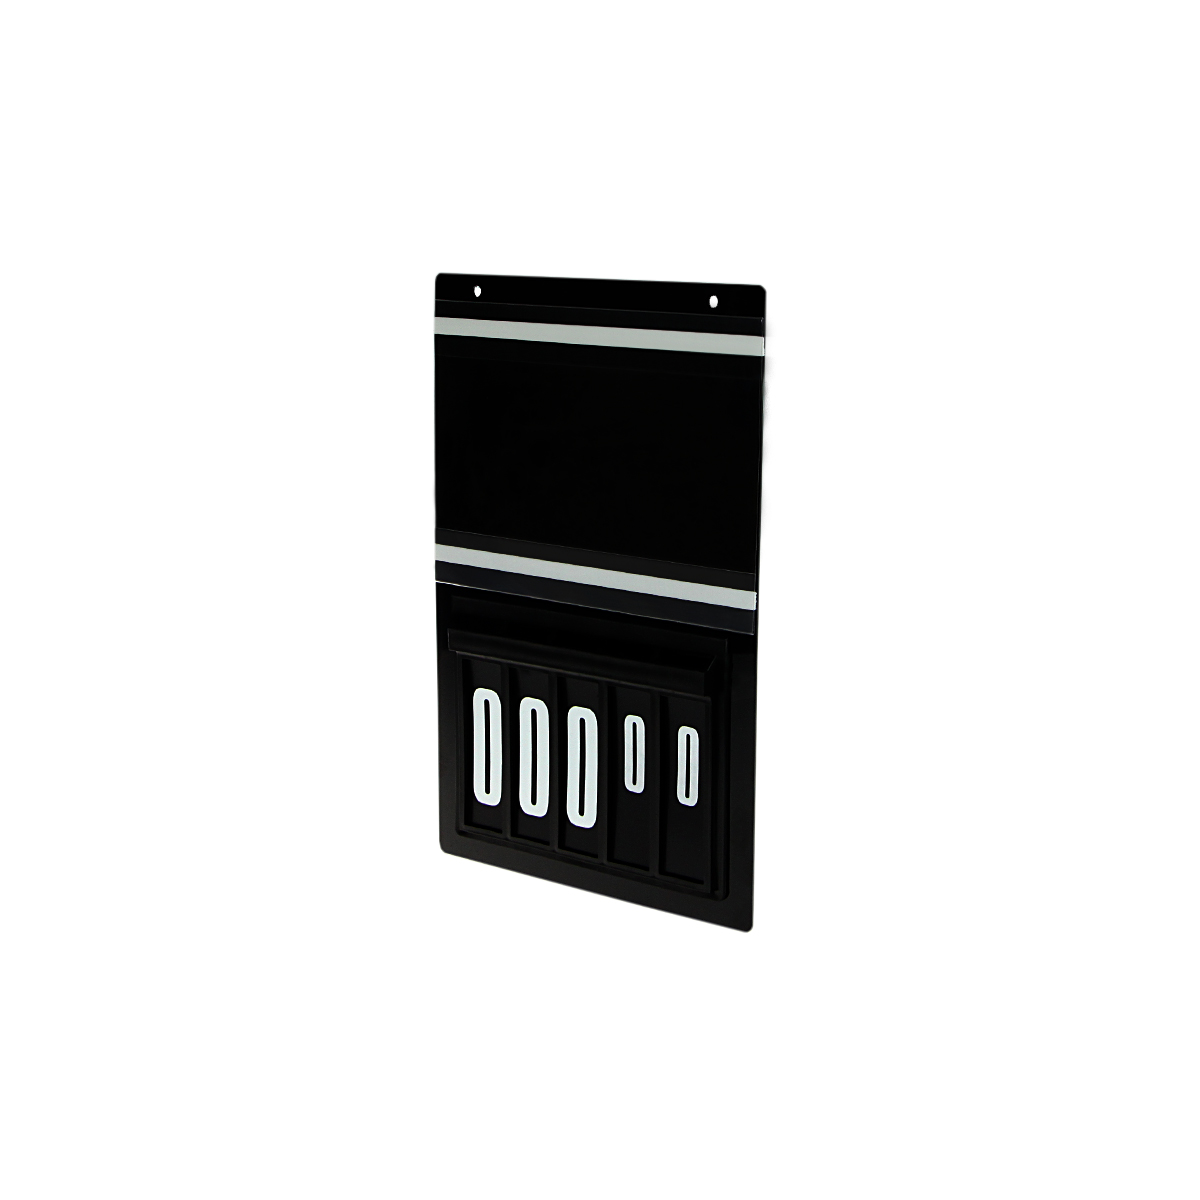 Кассета цен формат А4, цвет черный, в комплекте с блокнотами